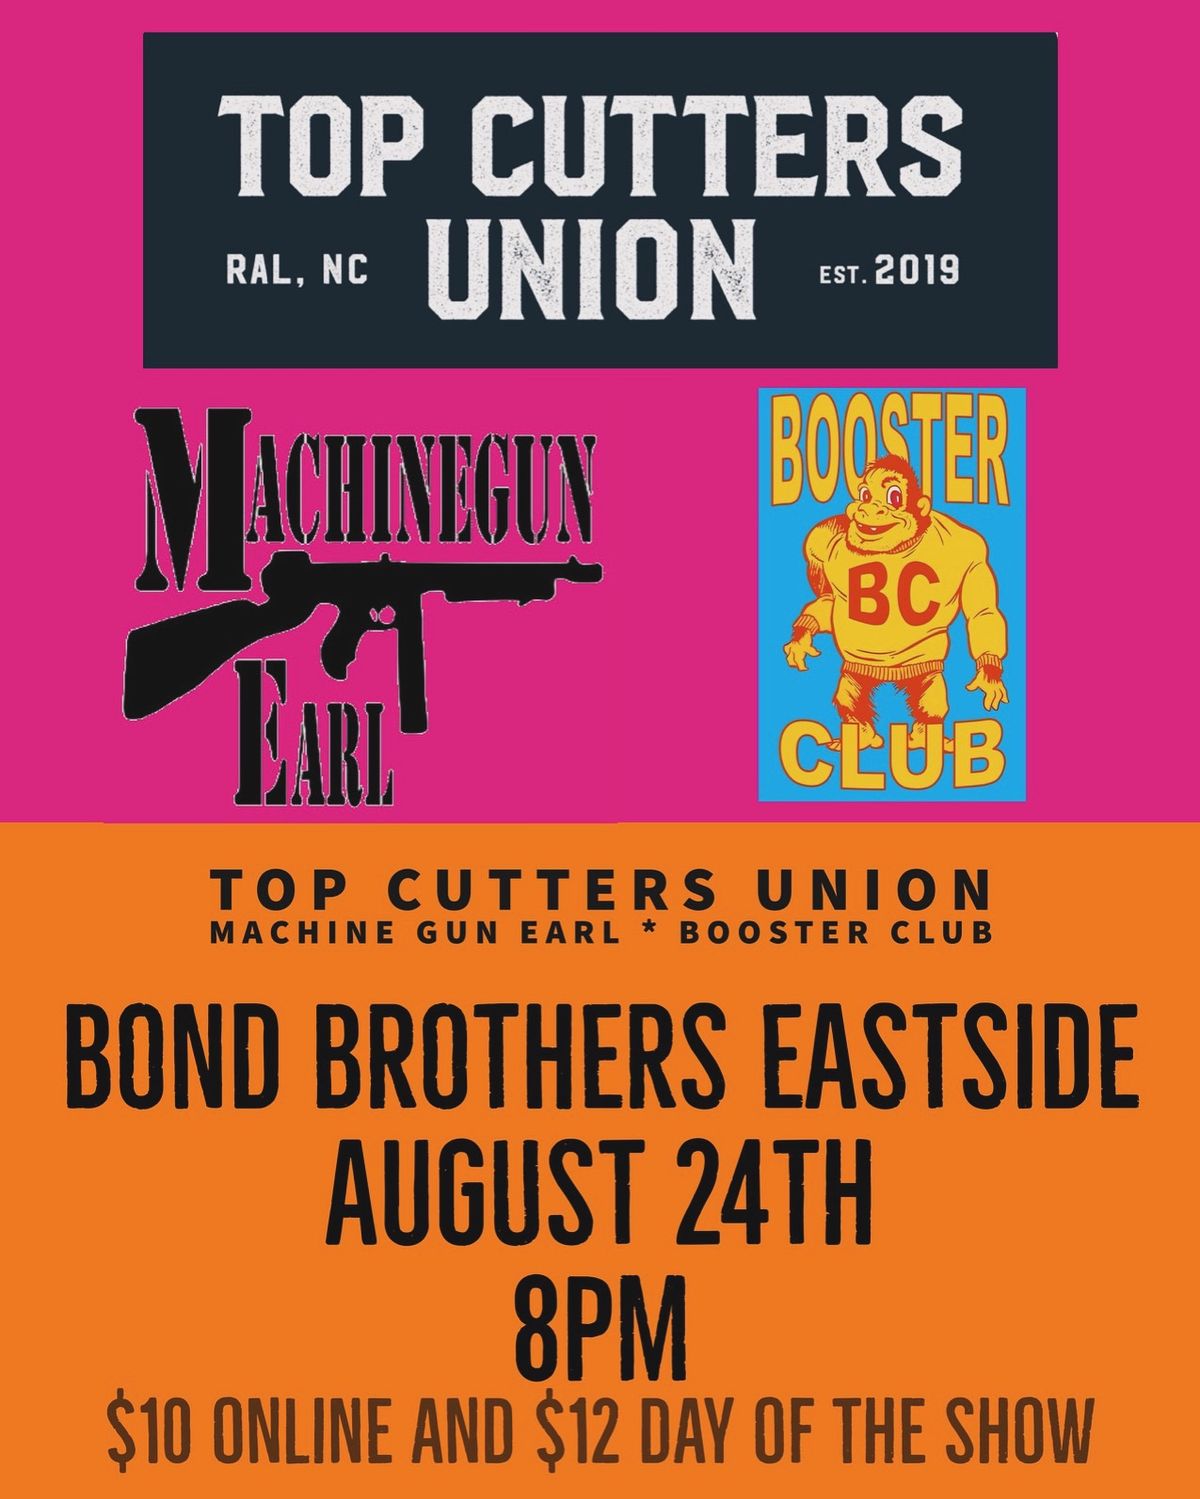 Top Cutters Union, Machinegun Earl, Booster Club @ Bond Brothers Eastside